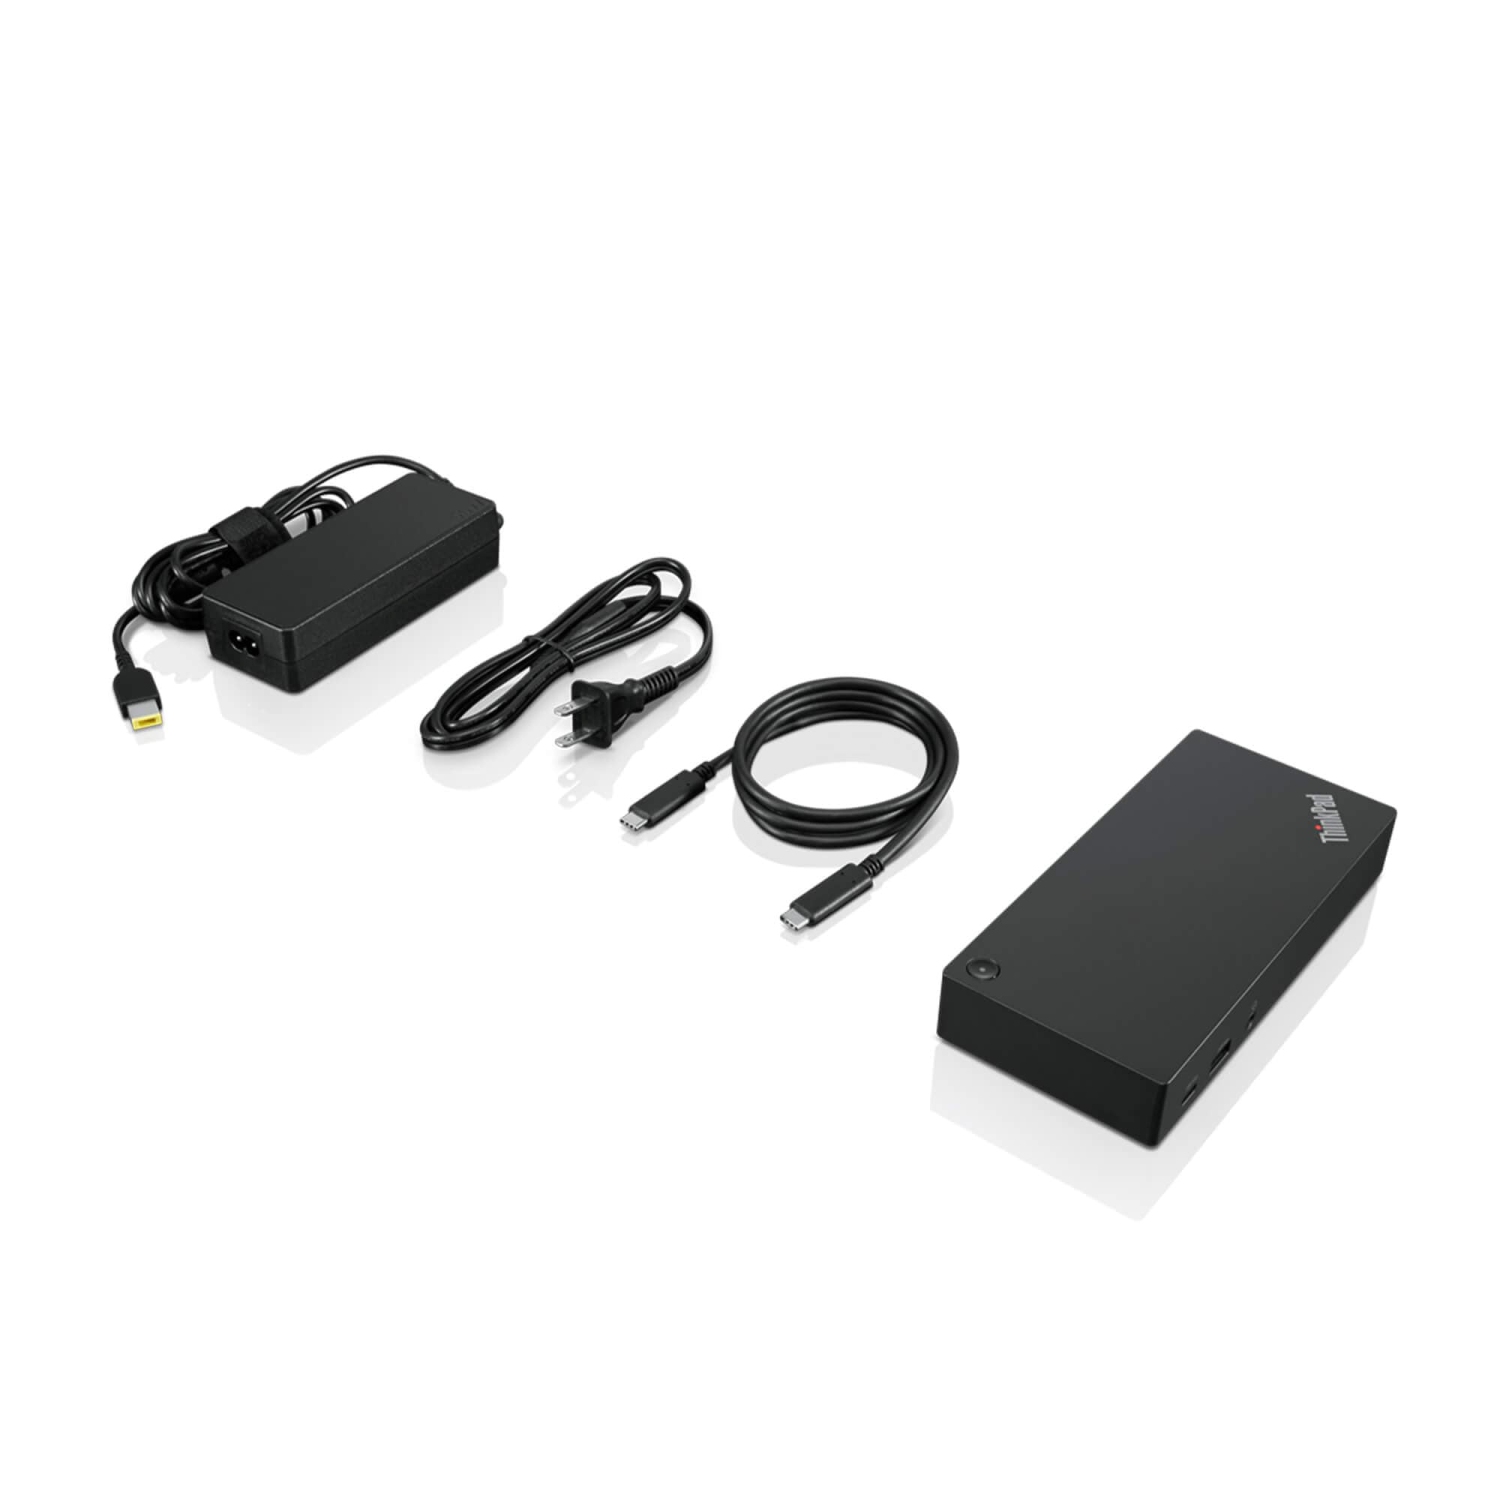 Lenovo ThinkPad USB-C Dock Gen 2 (40AS0090US) - USB 3.1, USB-C Ethernet, Display Port, HDMI